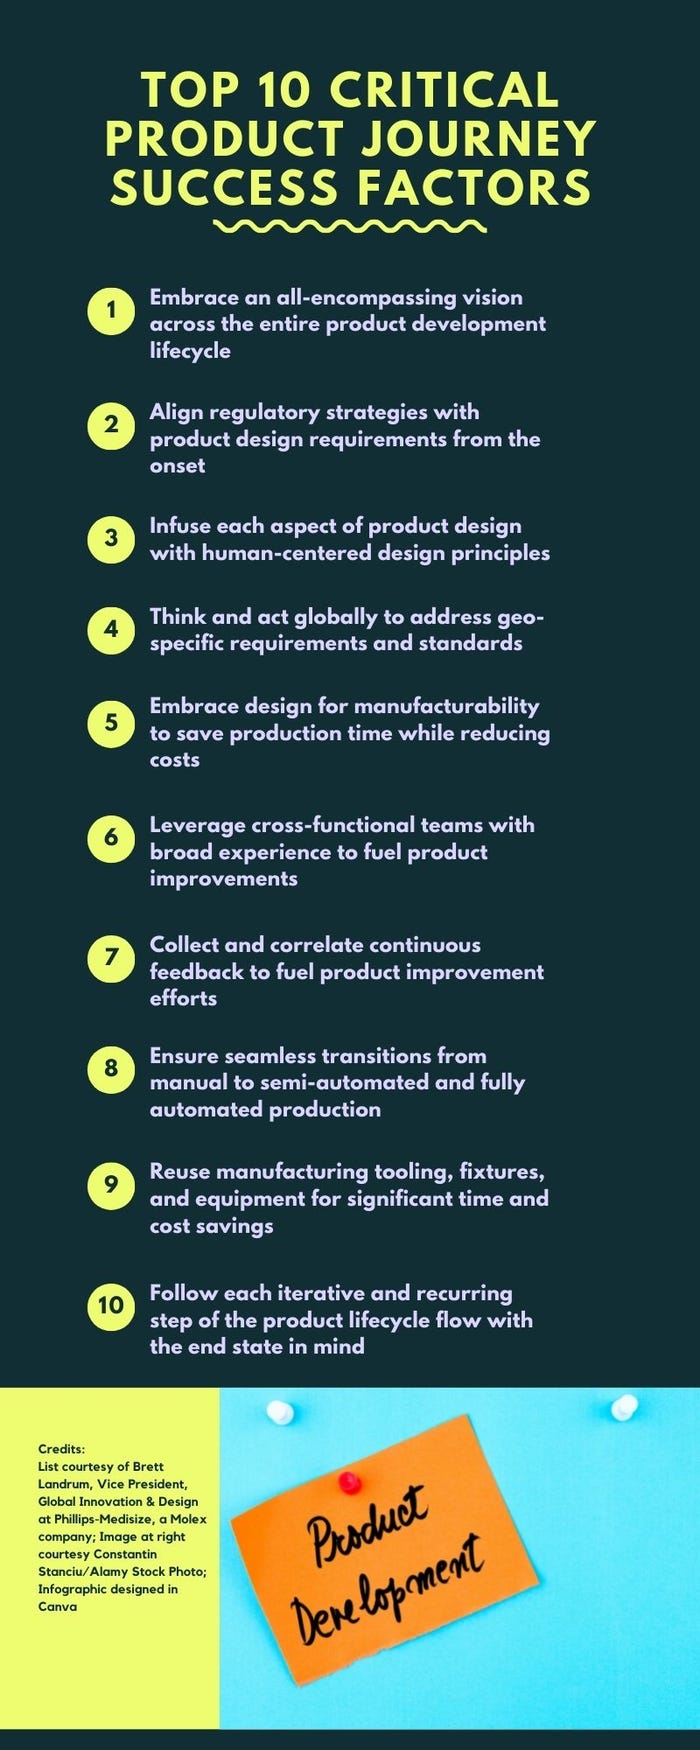 Top 10 Critical Product Journey Success Factors infographic.jpg